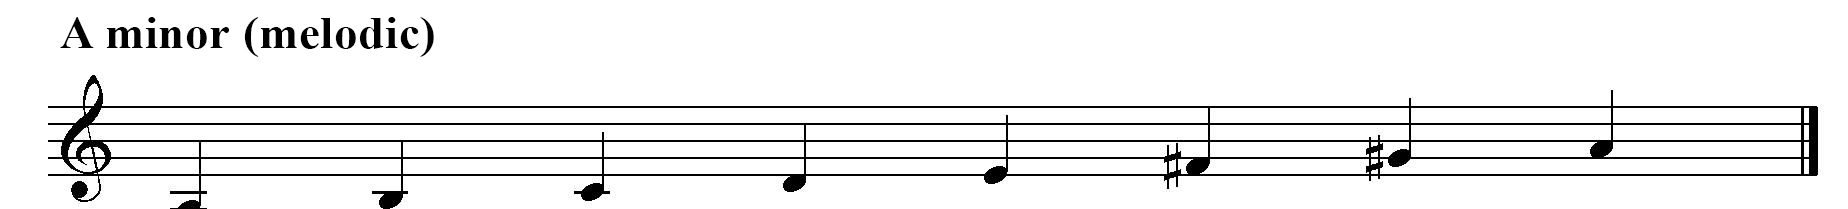 A minor (melodic)